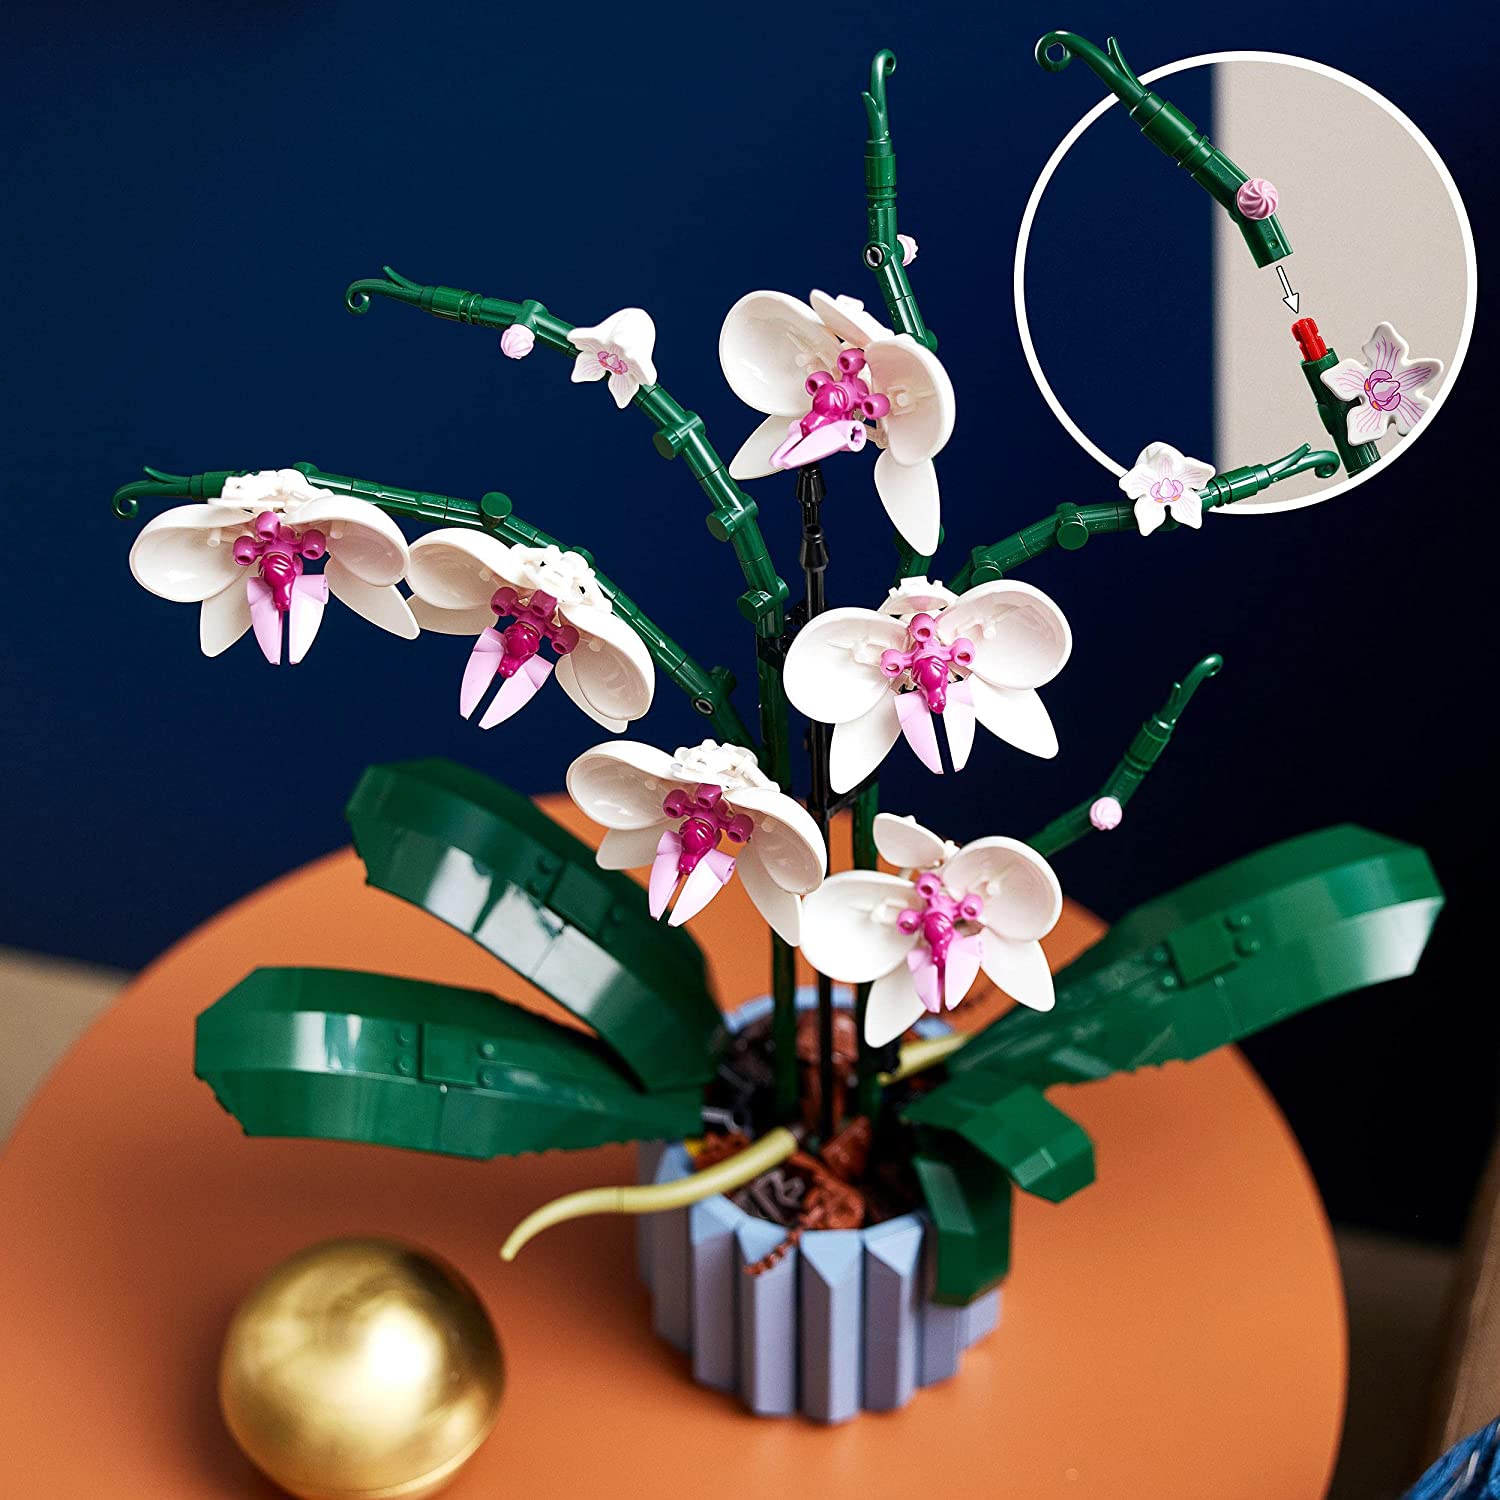 Конструктор LEGO Botanical 10311 - Orchid